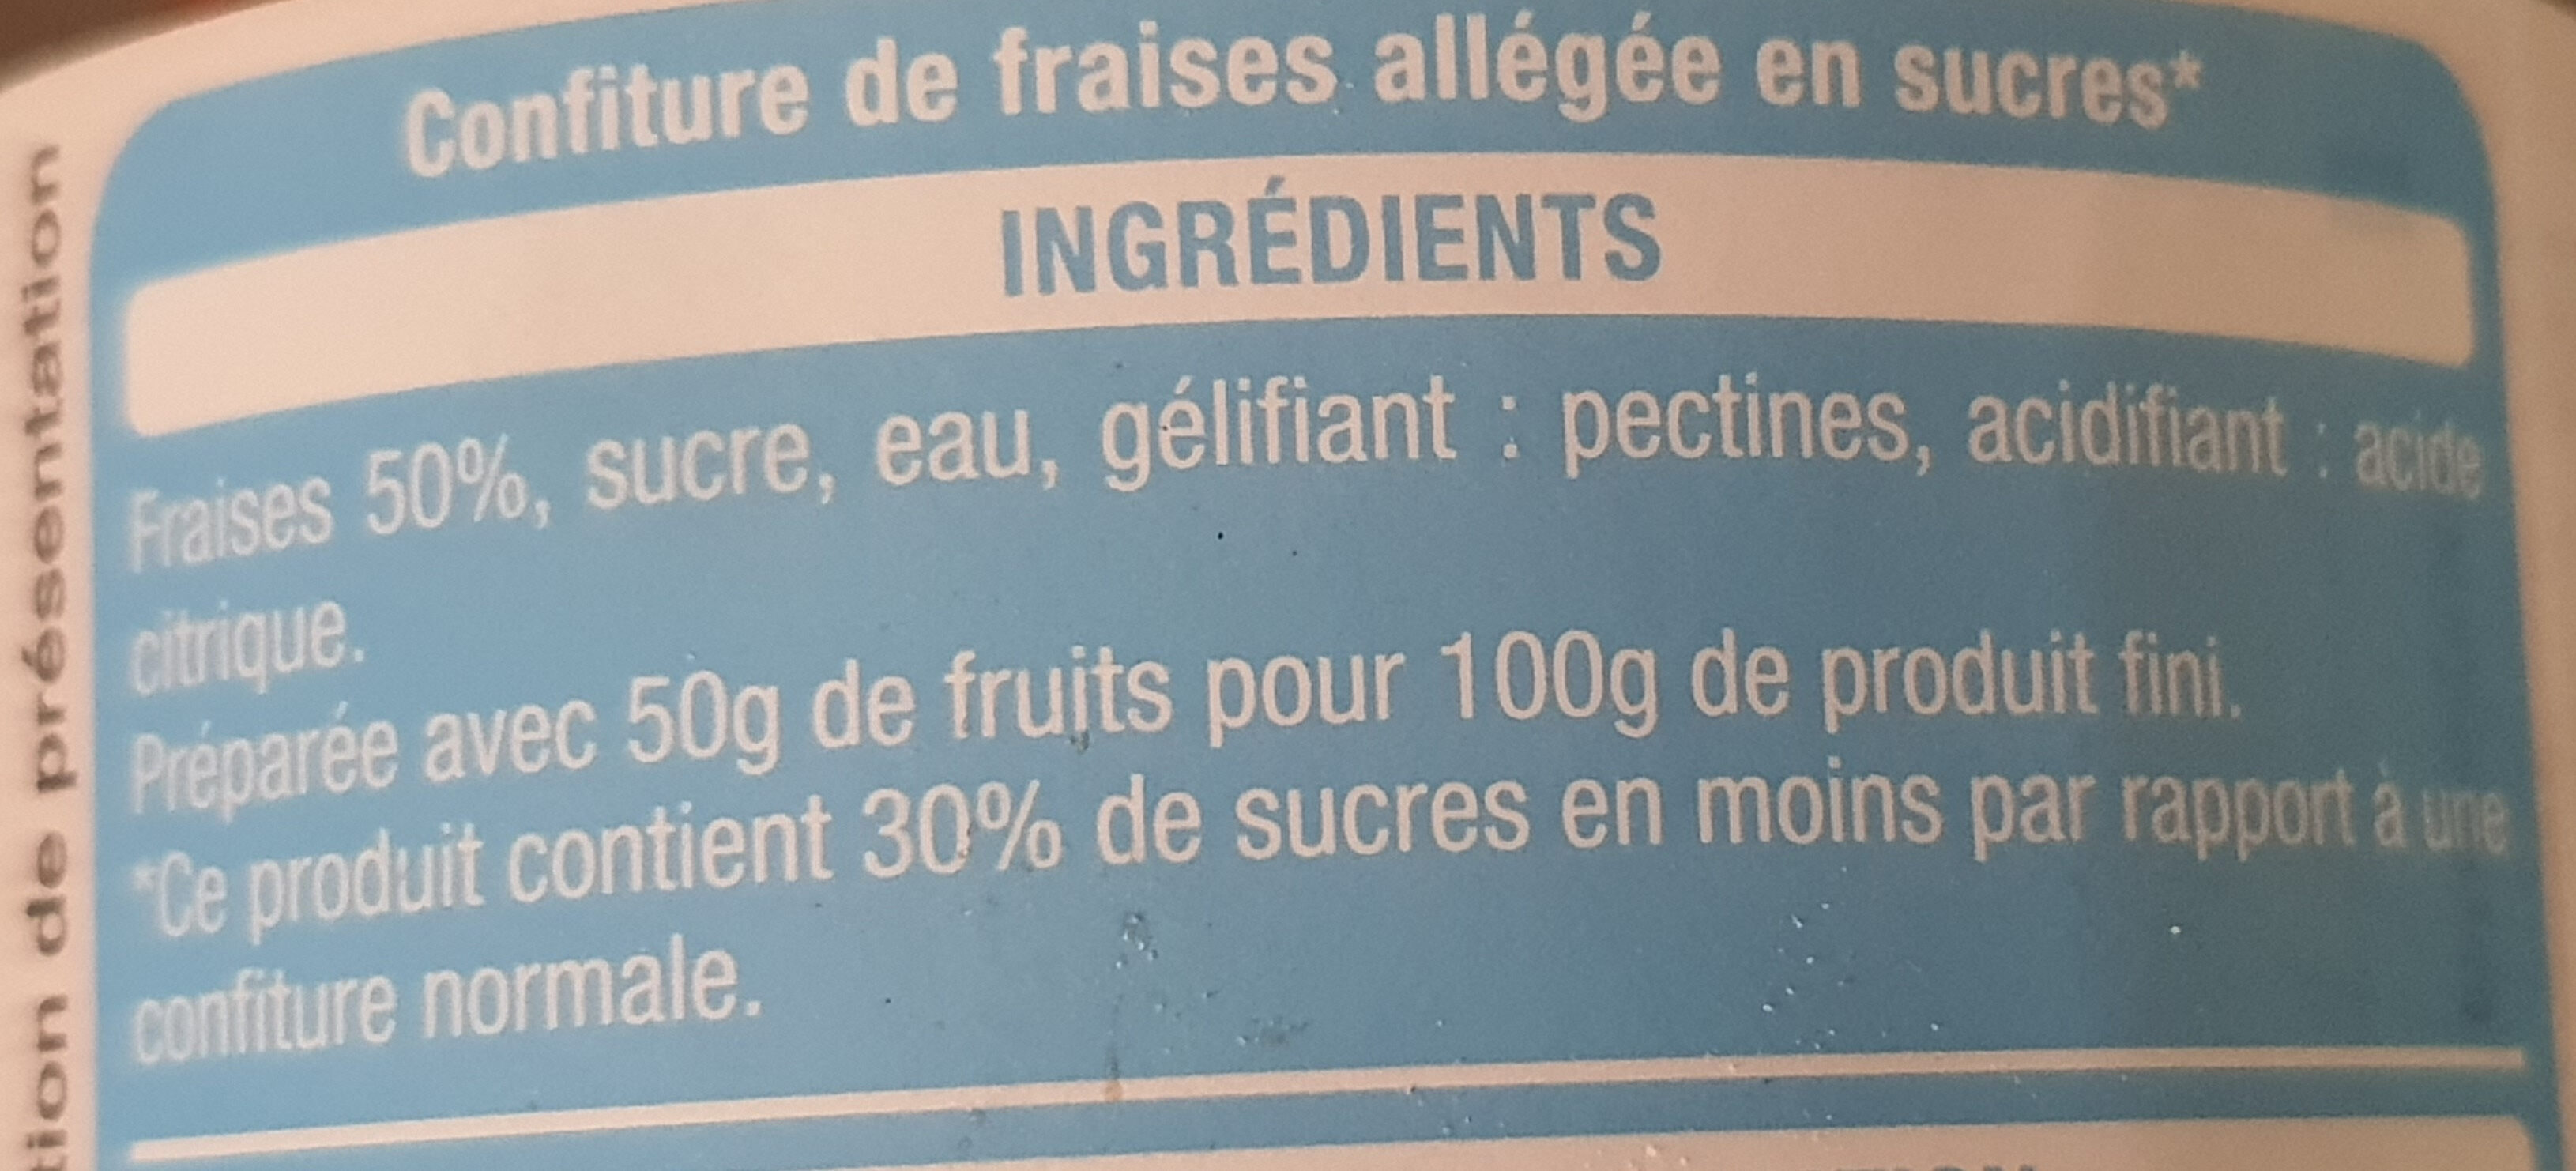 Confiture allegée fraise - Ingredientes - fr